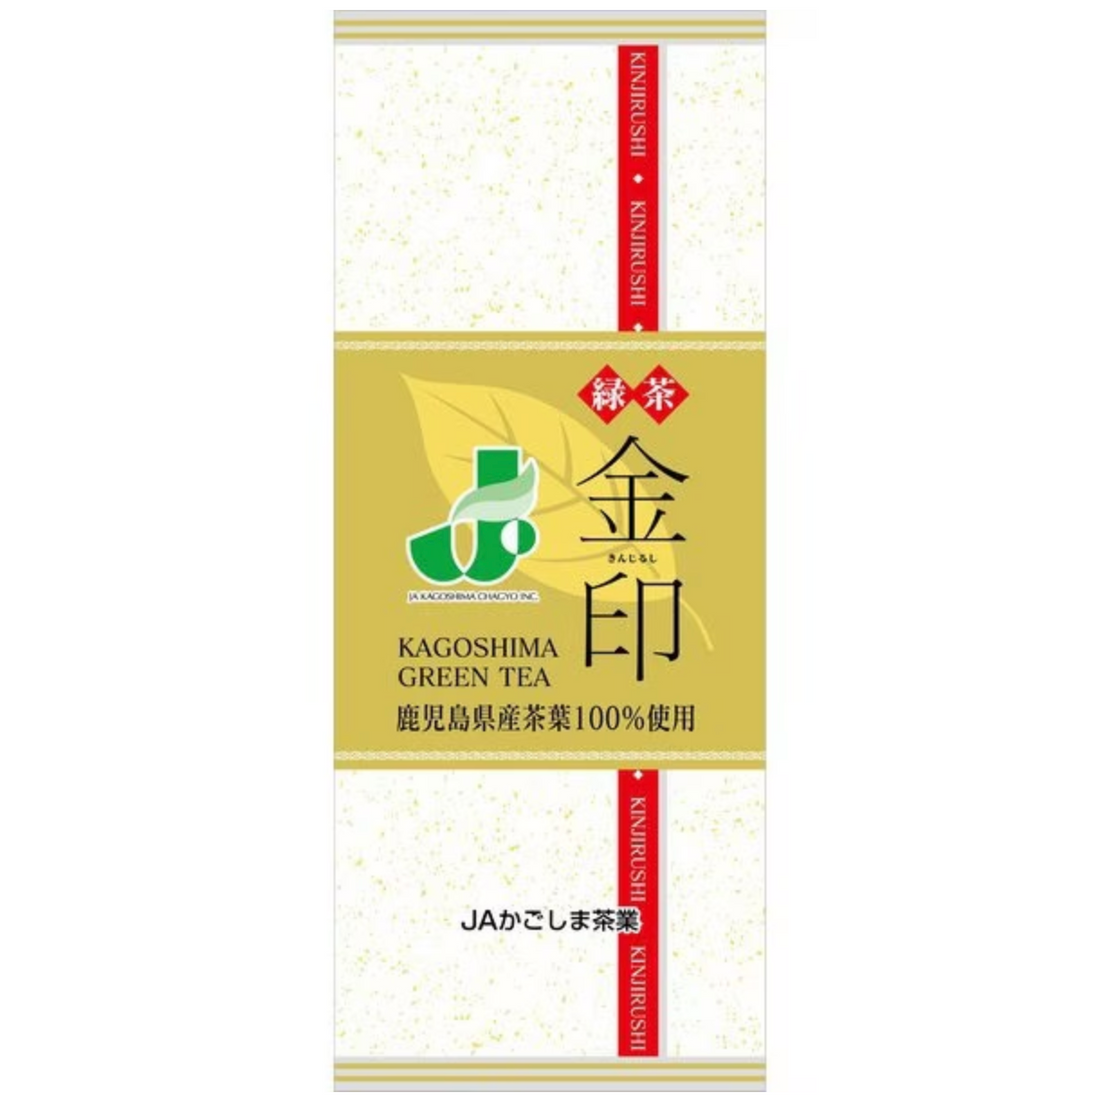 JA Kagoshima Tea Industry Kagoshima Tea Gold Seal 500g